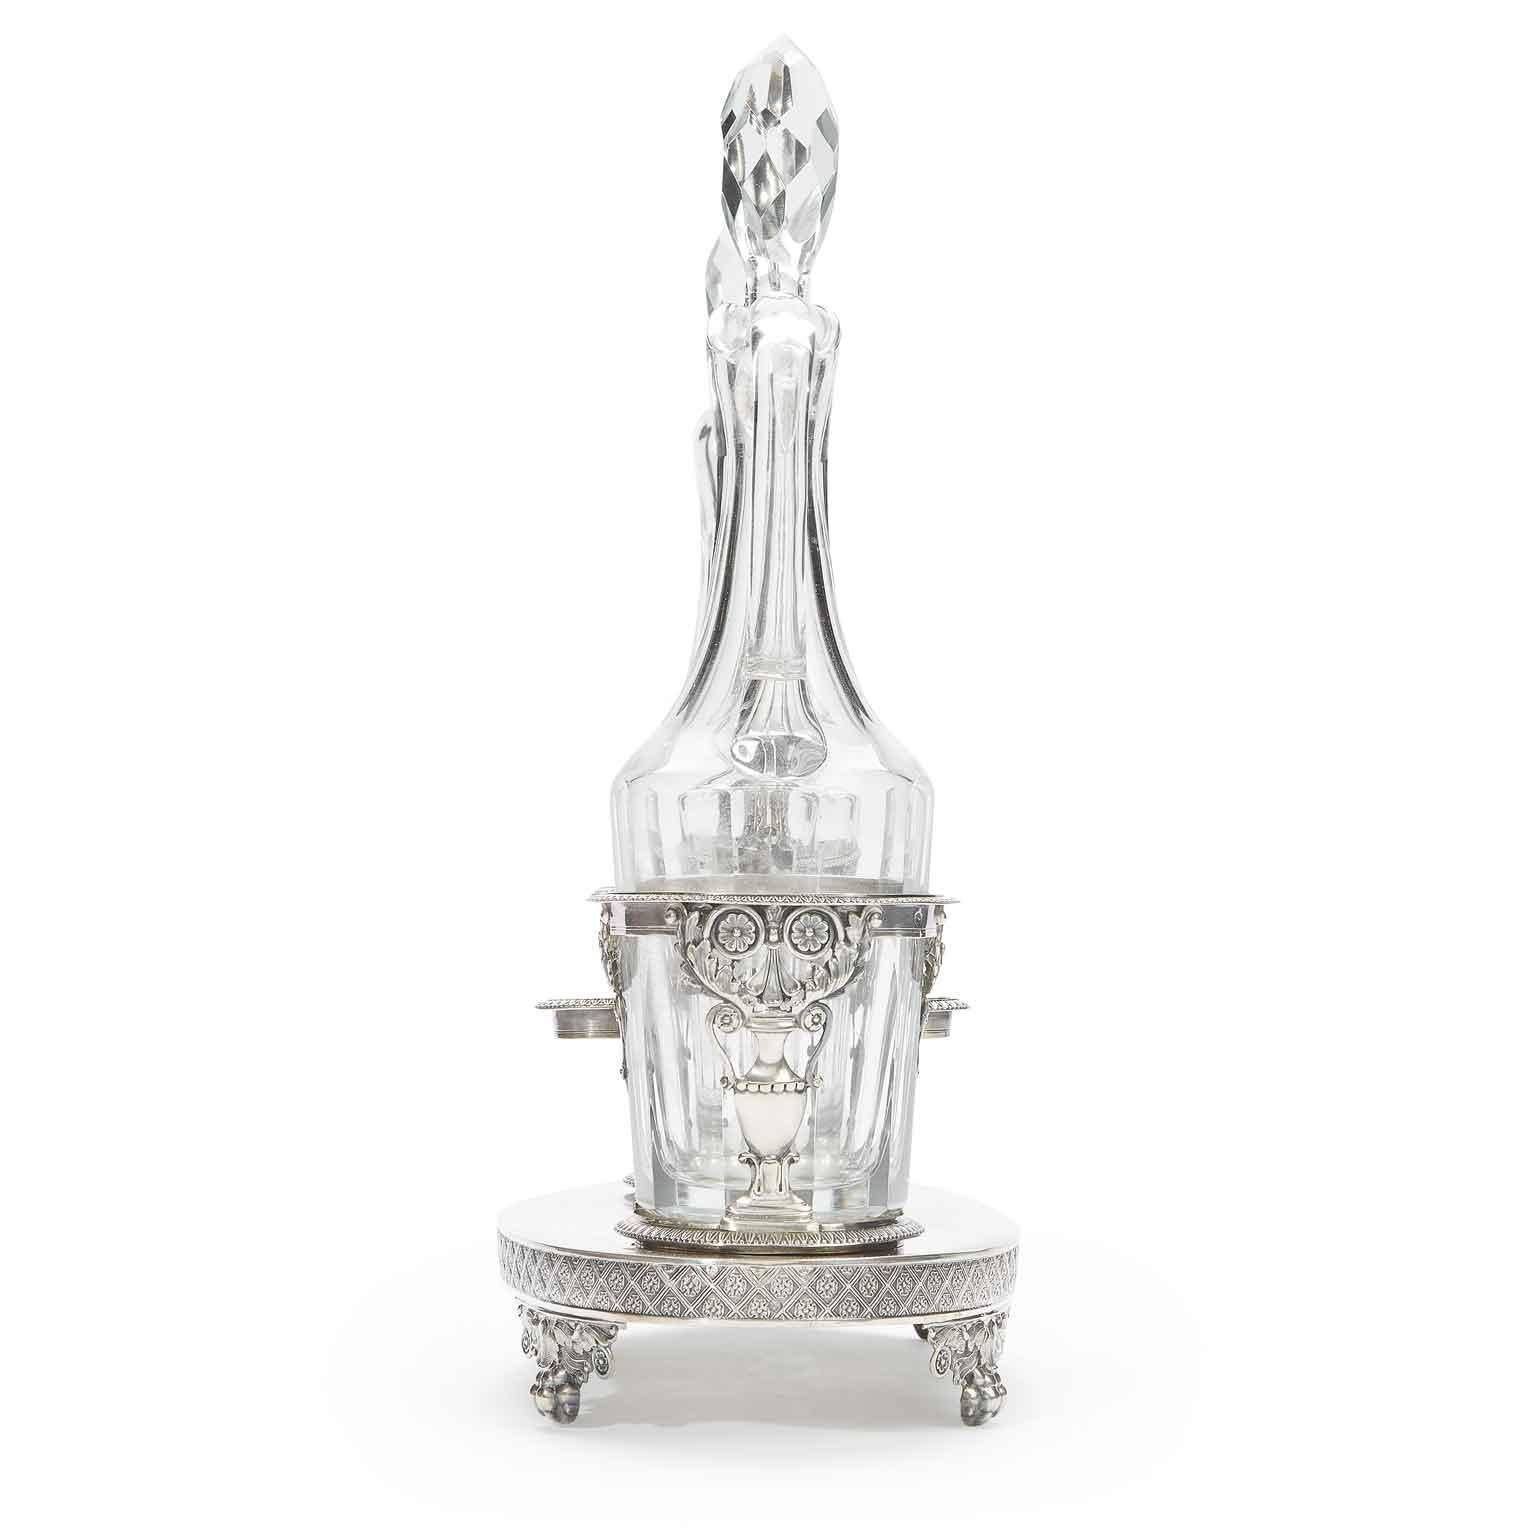 19th Century Neoclassical French Oil and Vinegar Cruet Set Paris Sterling Silver 6